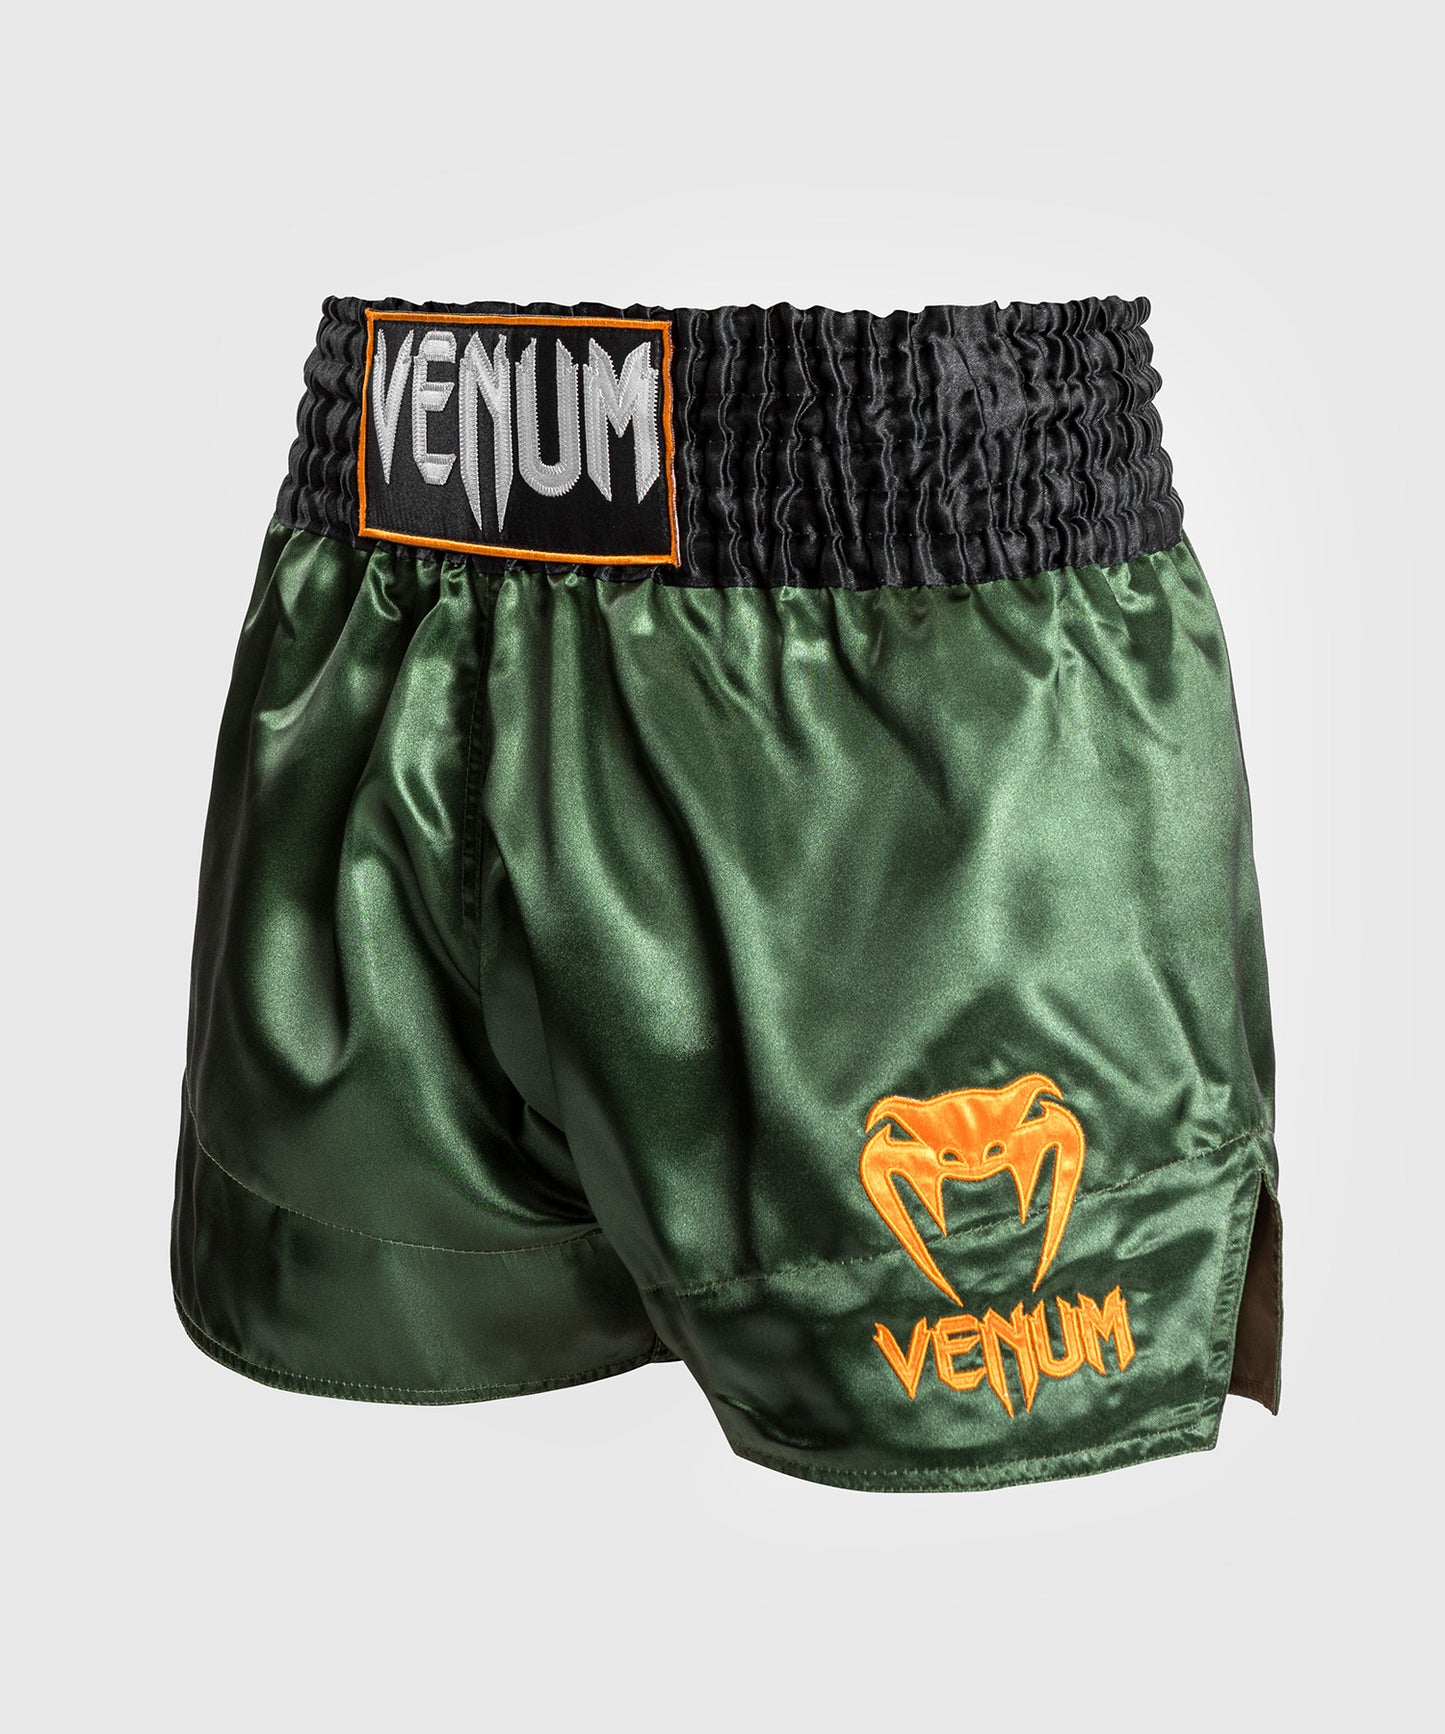 Venum Classic Muay Thai Shorts - Grün/Gold/Schwarz